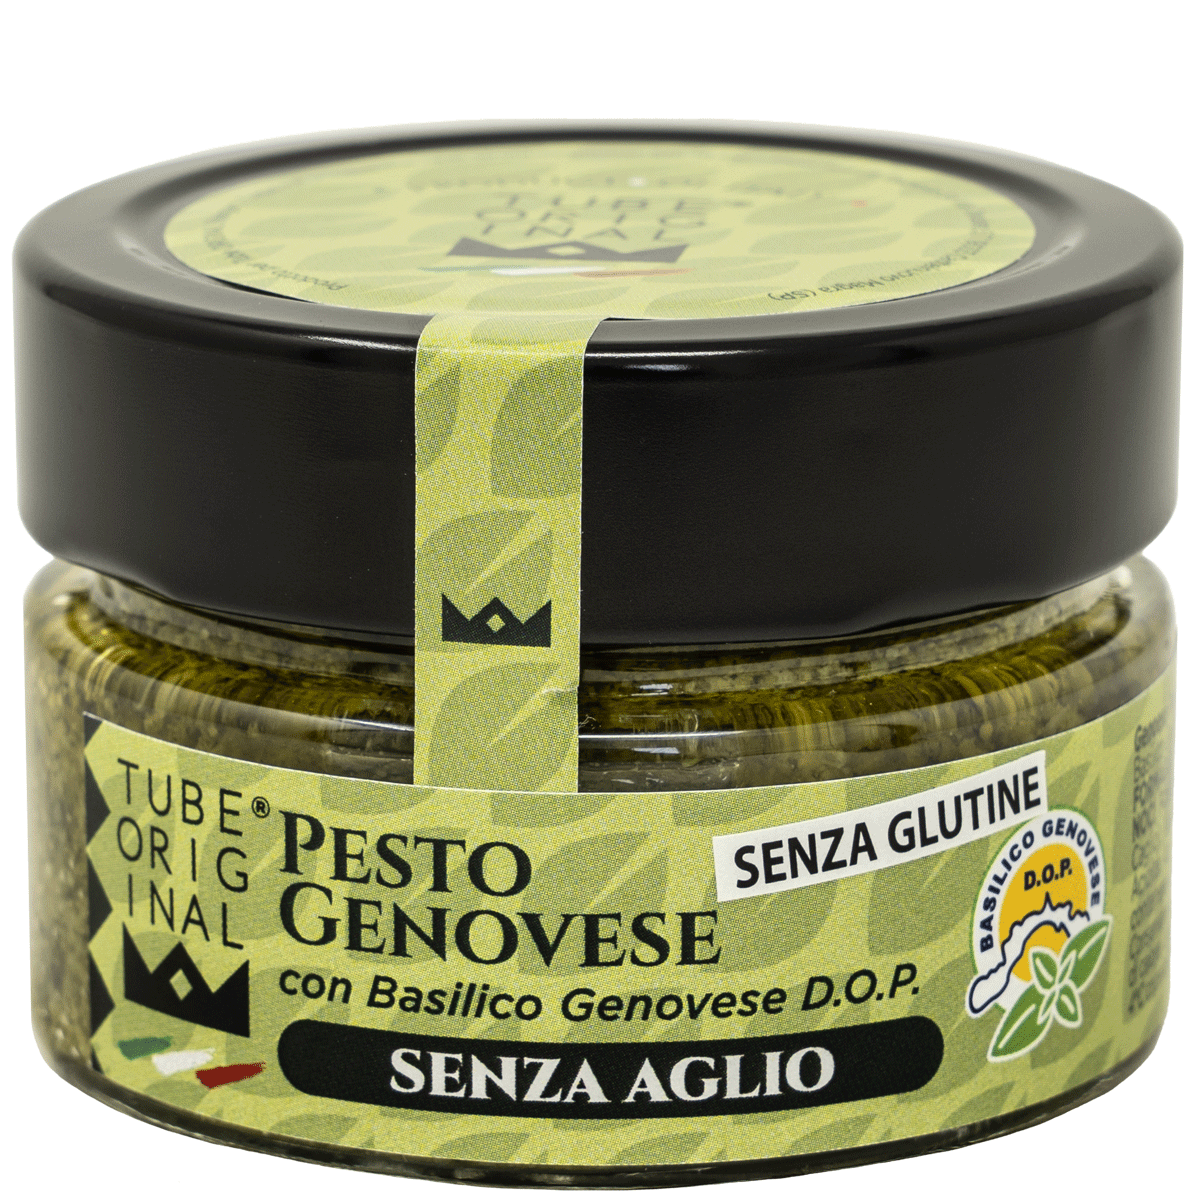 Genuesisches Pesto mit Basilikum Genovese D.O.P ohne Knoblauch